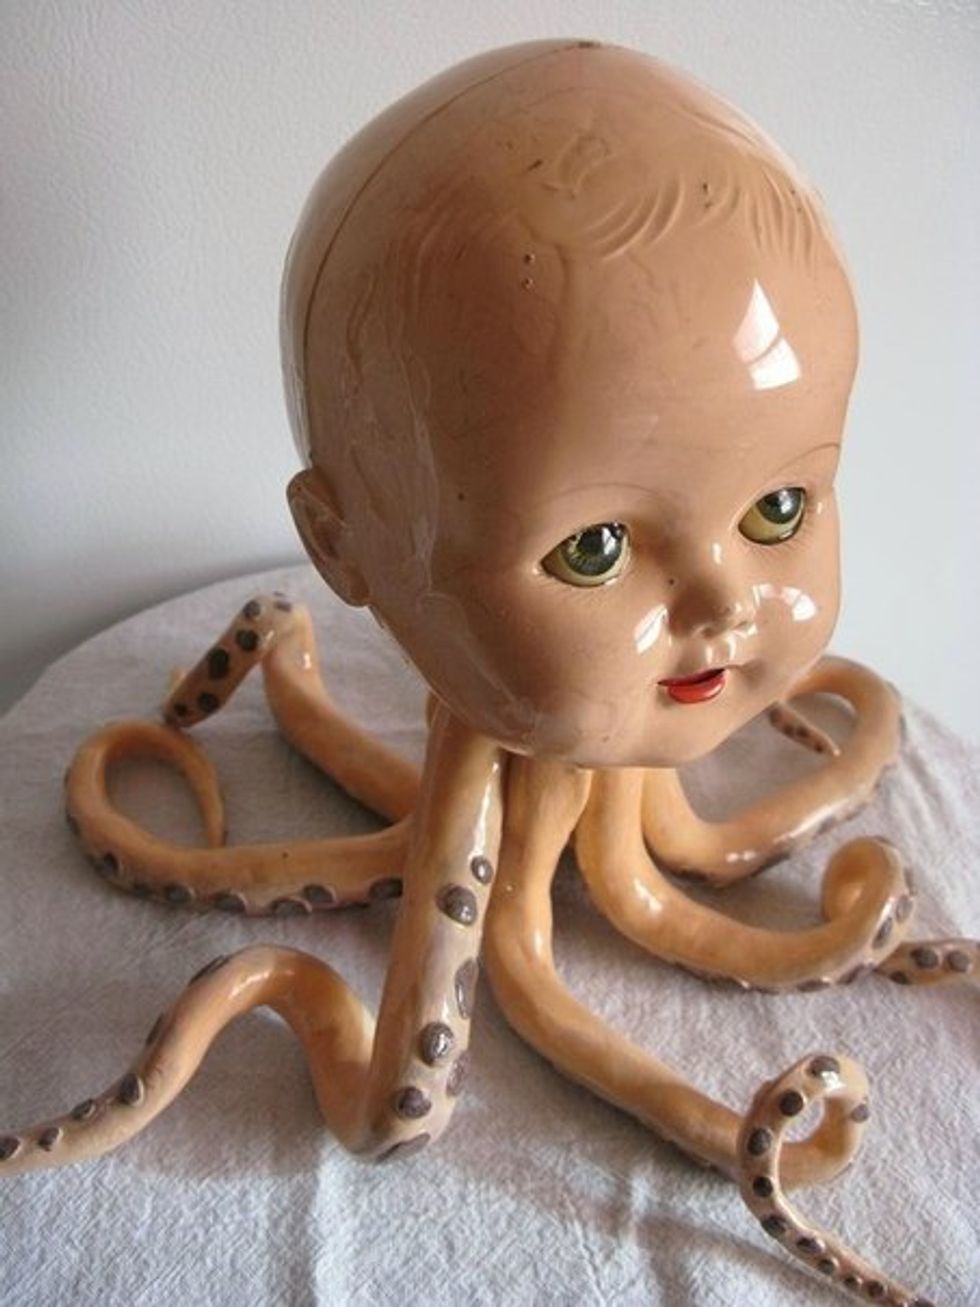 DOJ Finally Investigating Planned Parenthood's Fetus-Parts Yard Sales